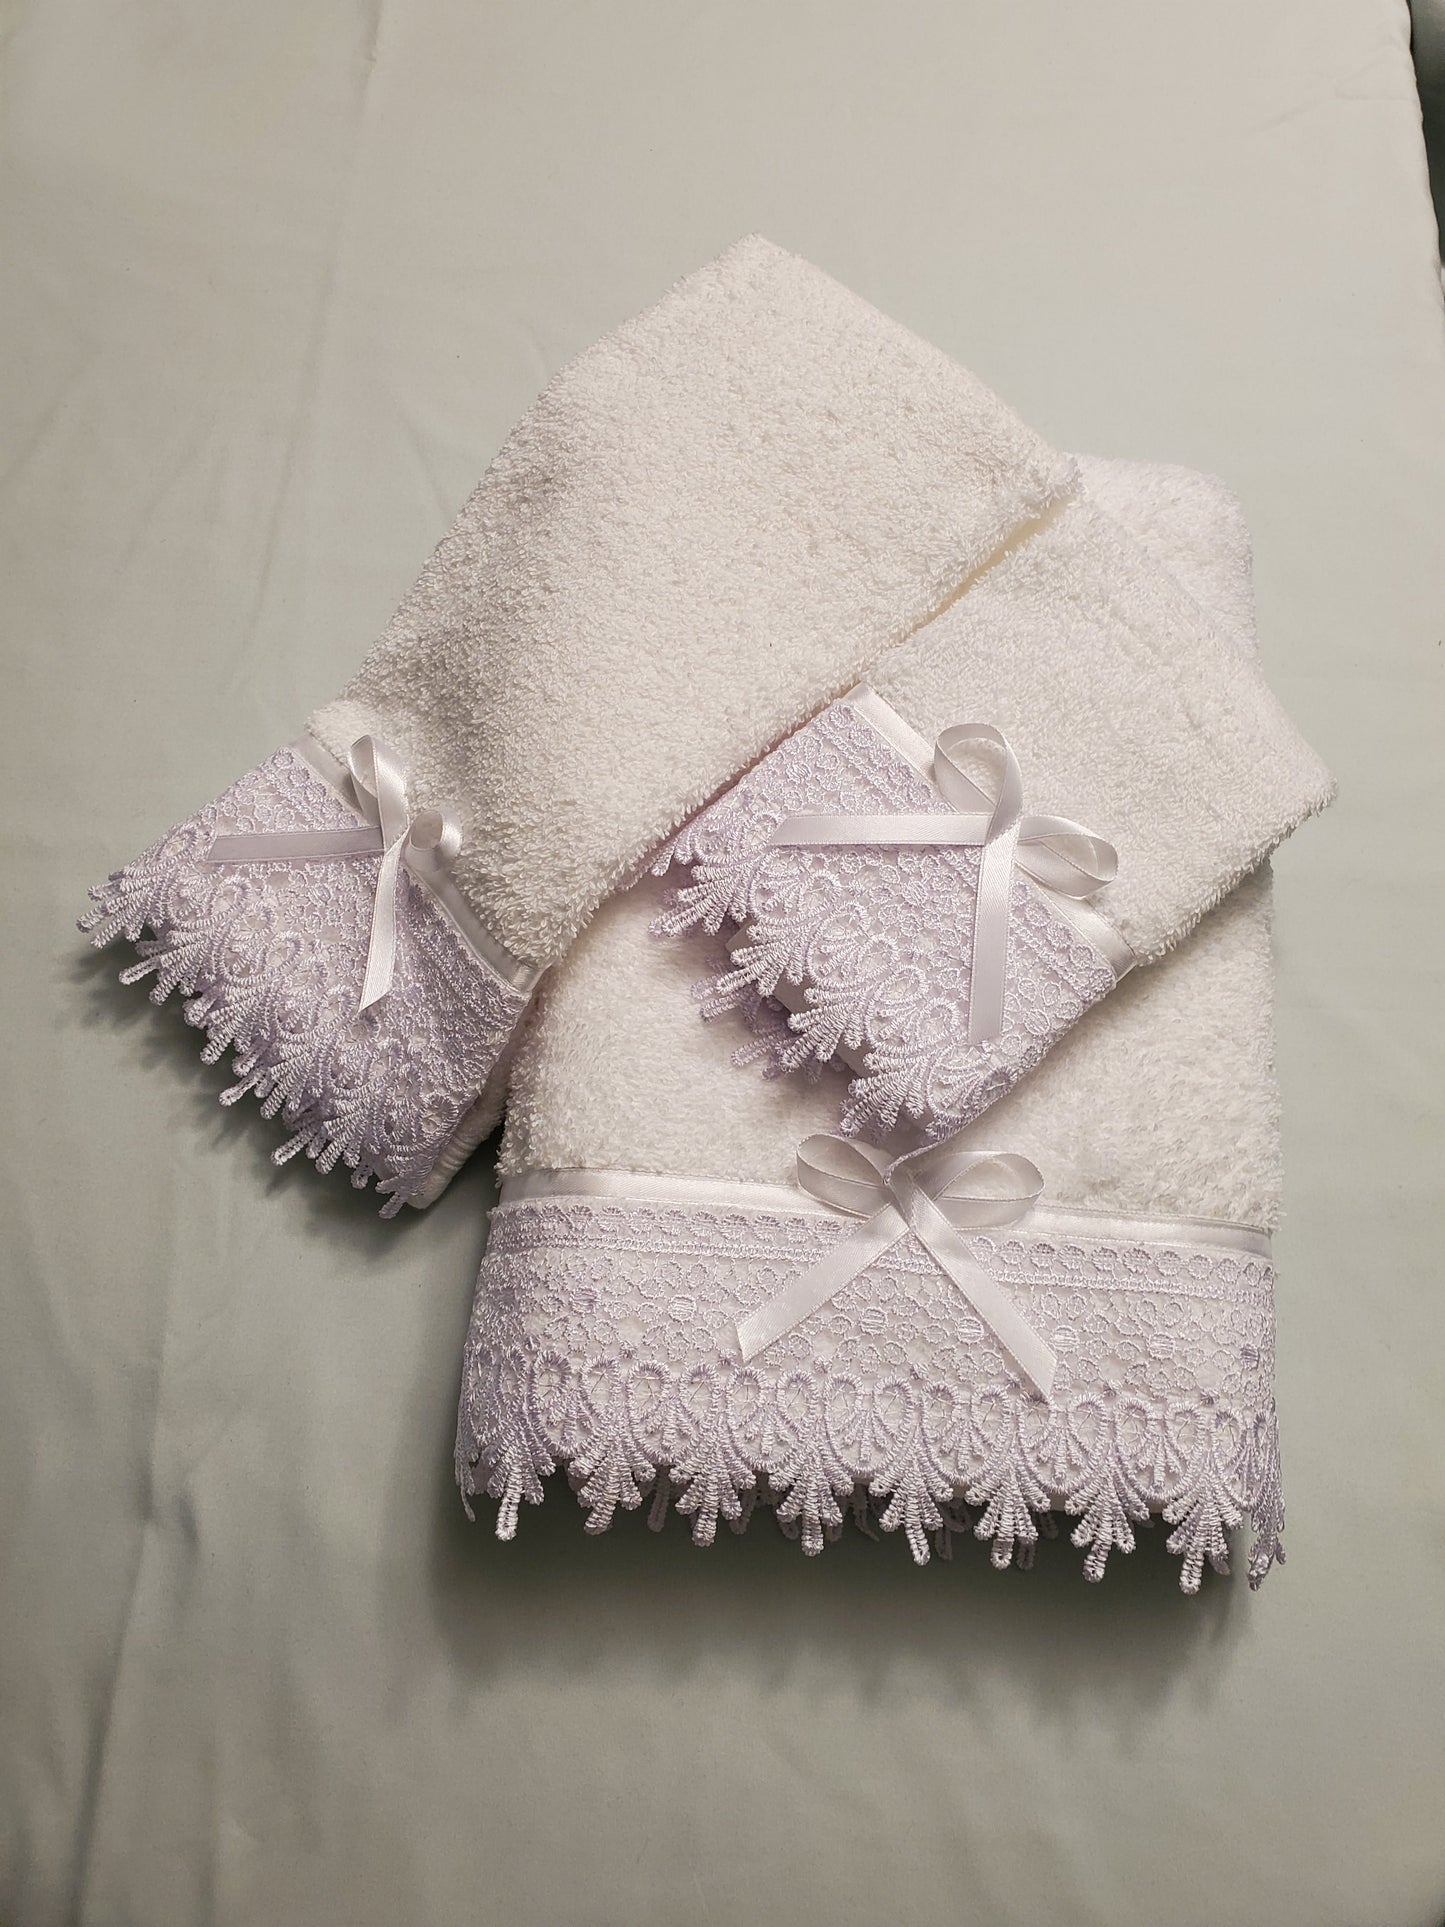 Carina Home Expression 3PC Decorative Bath Towel Set